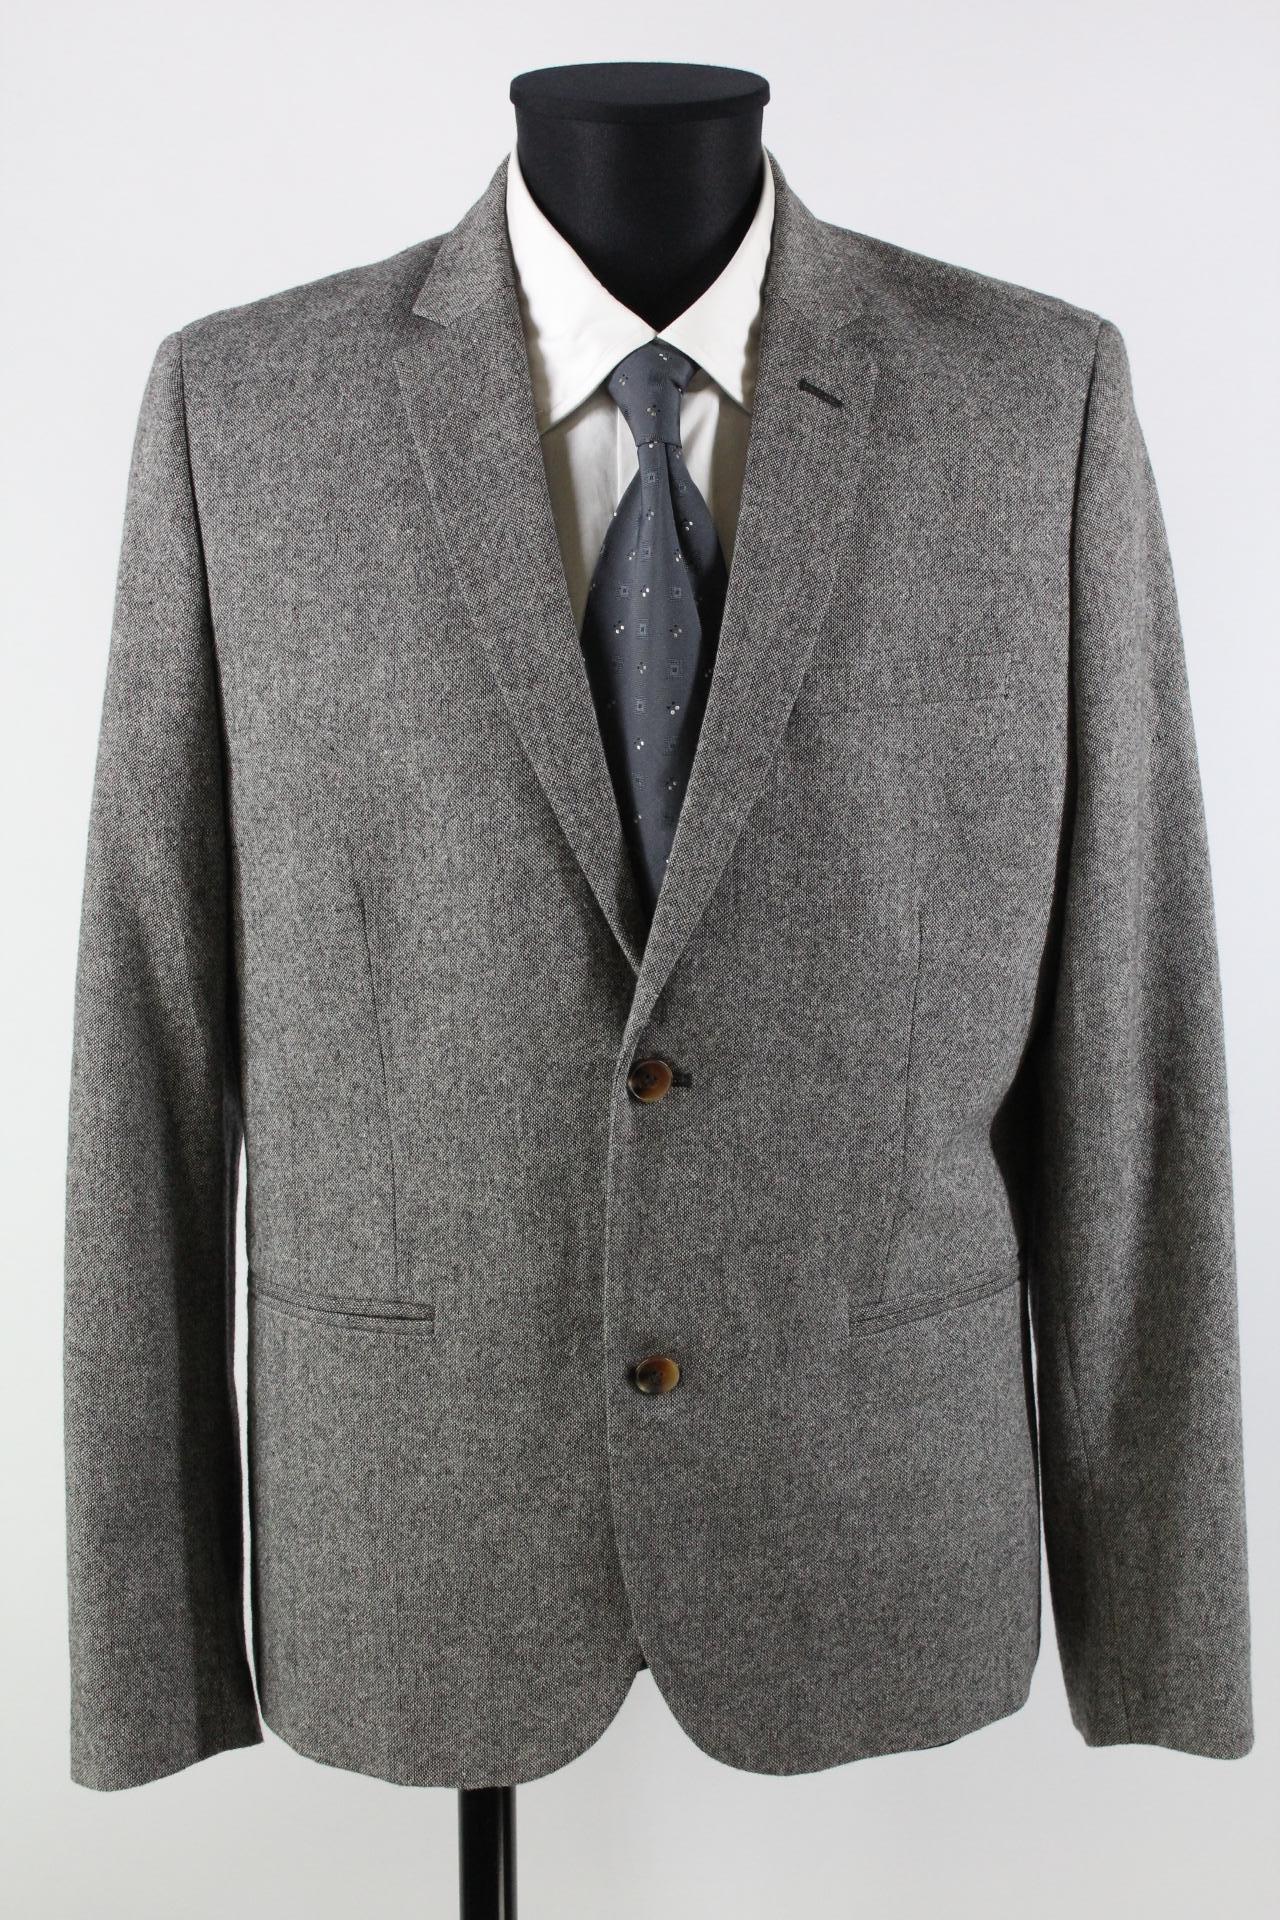 H&M Tweed-Sakko grau Größe 54